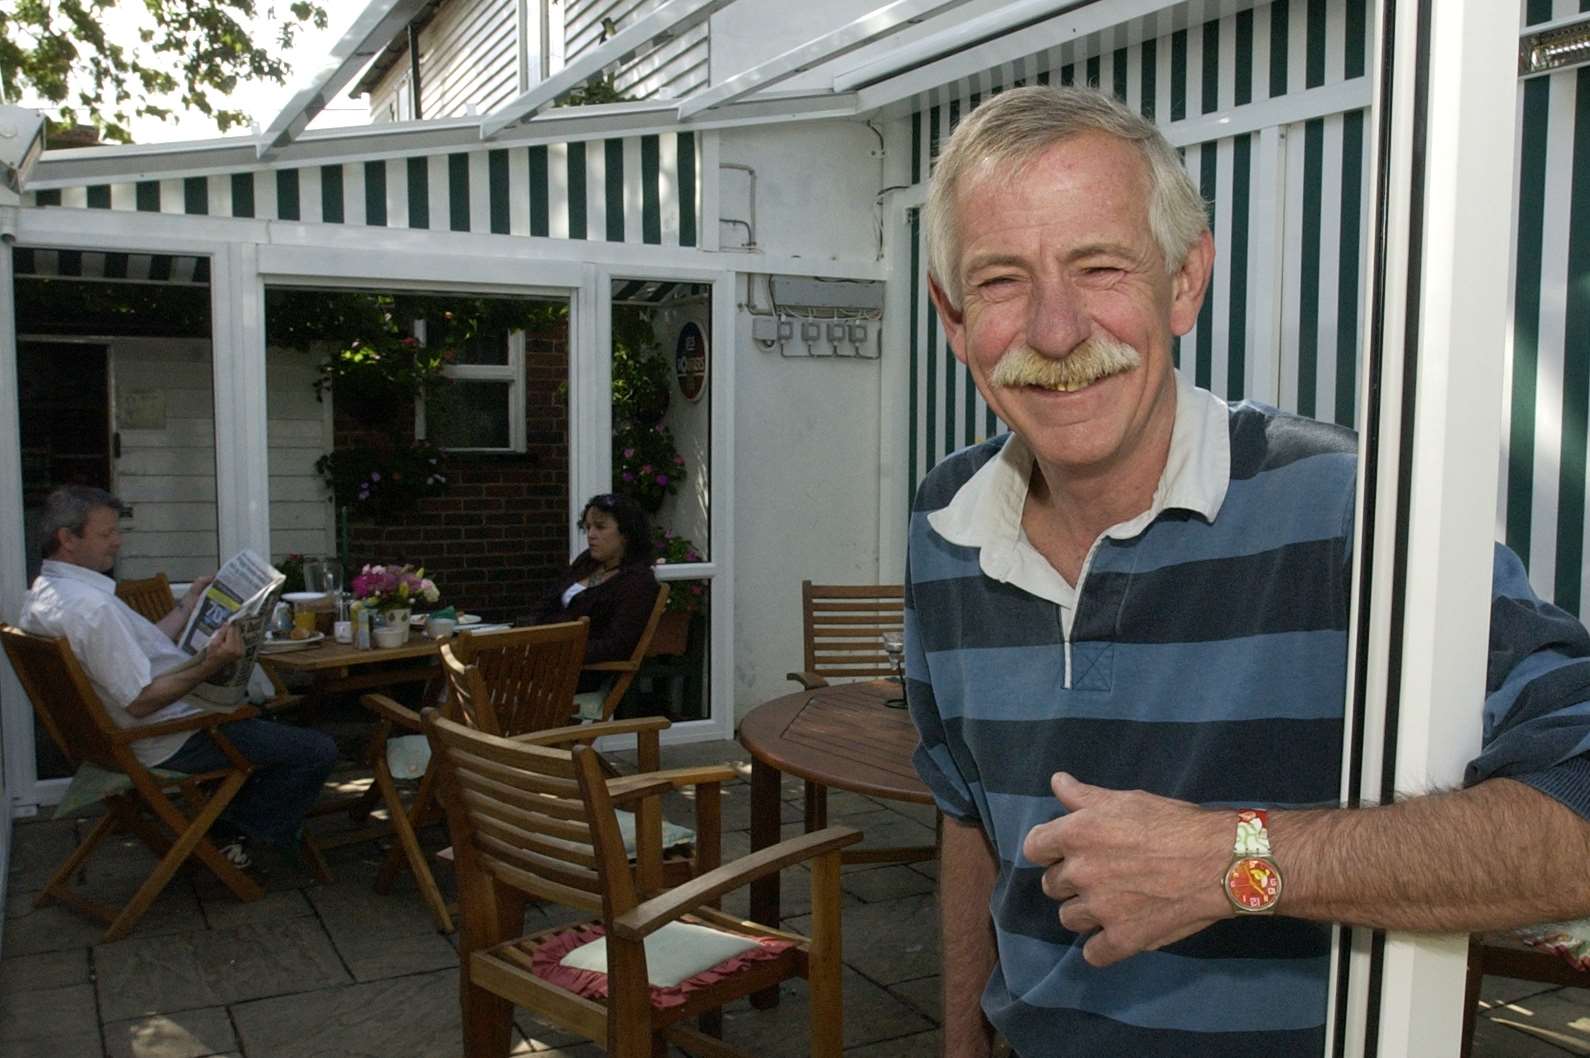 Former Red Lion landlord Robert Whigham has passed away